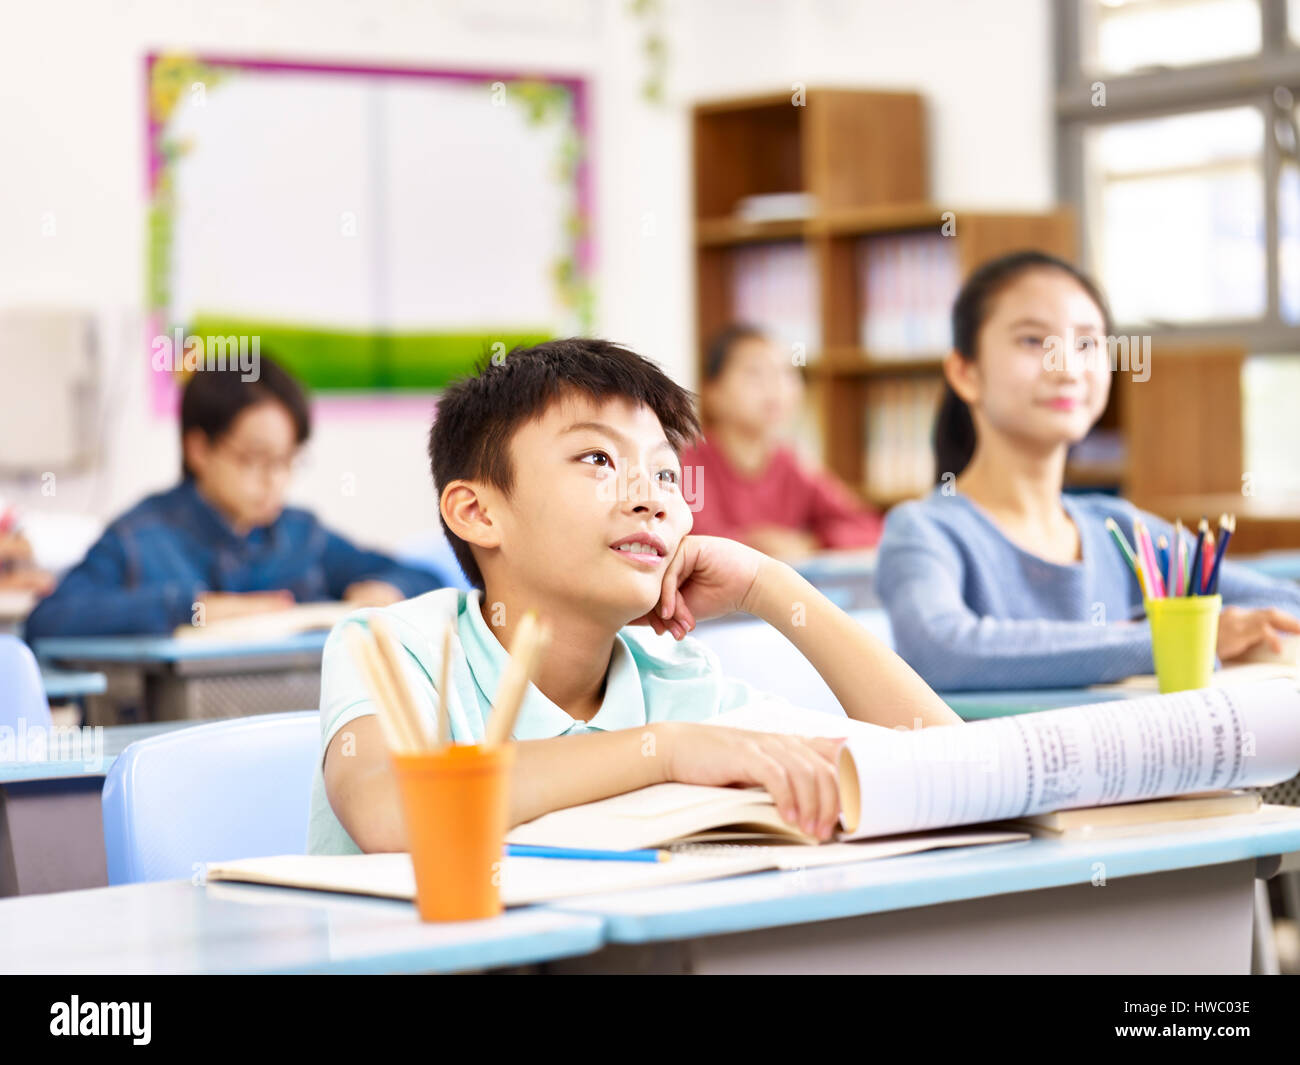 asian elementary school boy listening to teacher attentively in class. Stock Photo